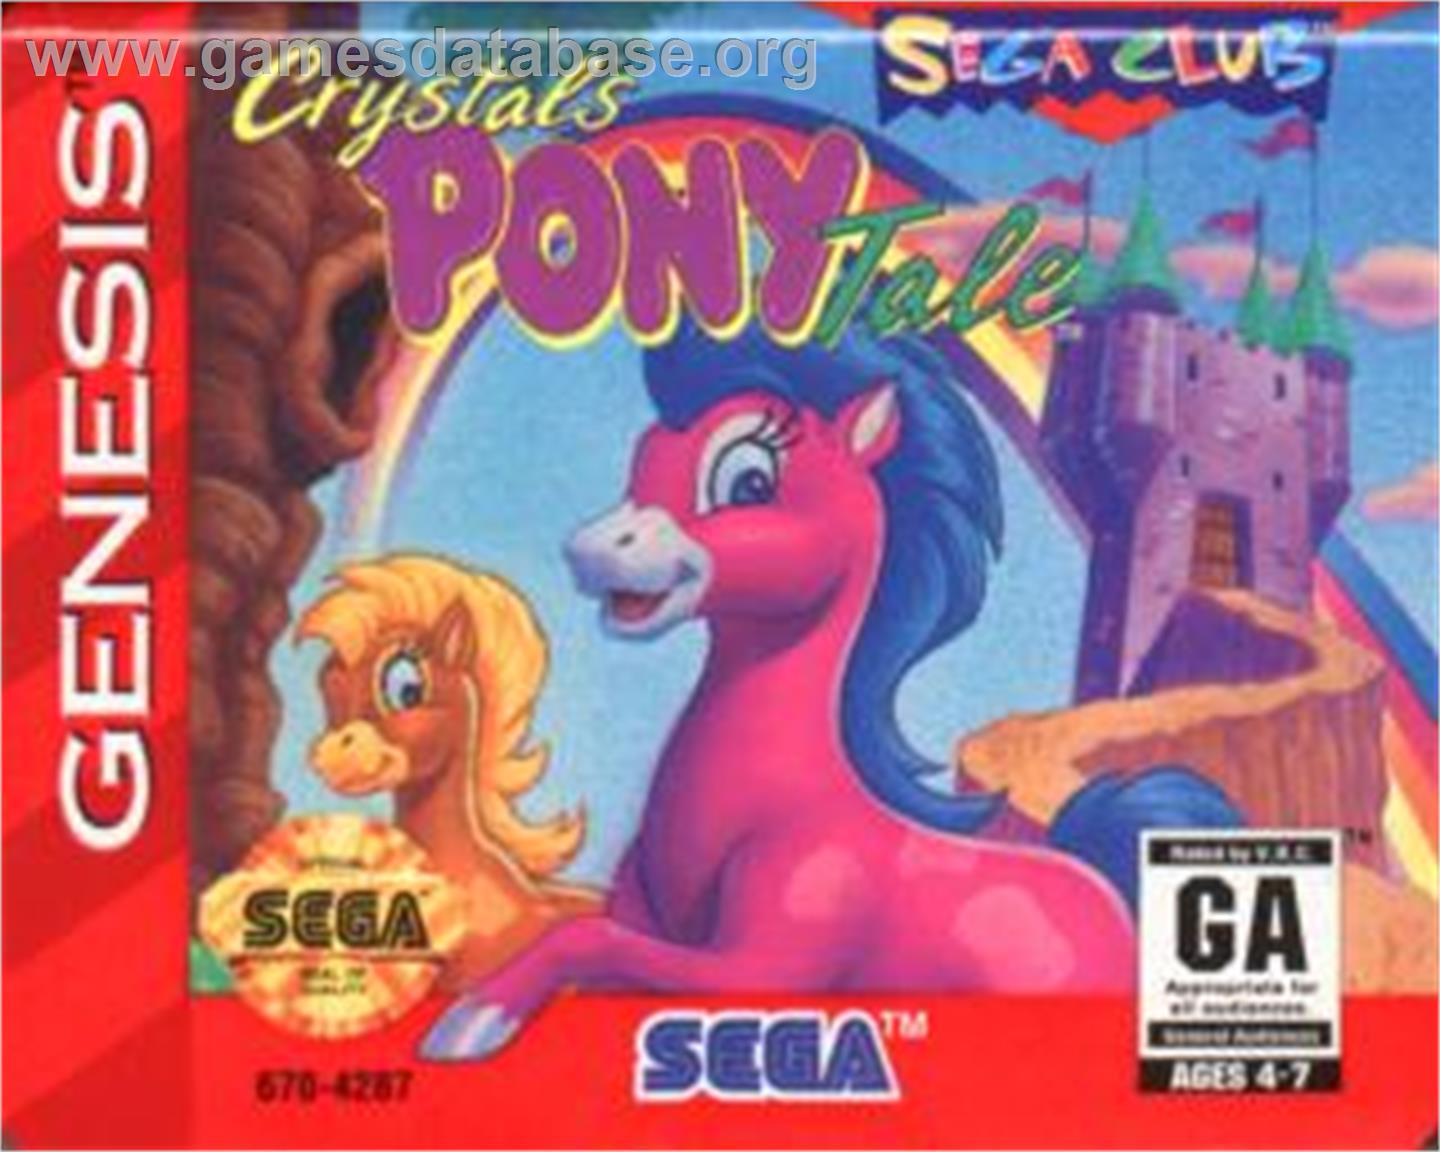 Crystal's Pony Tale - Sega Nomad - Artwork - Cartridge